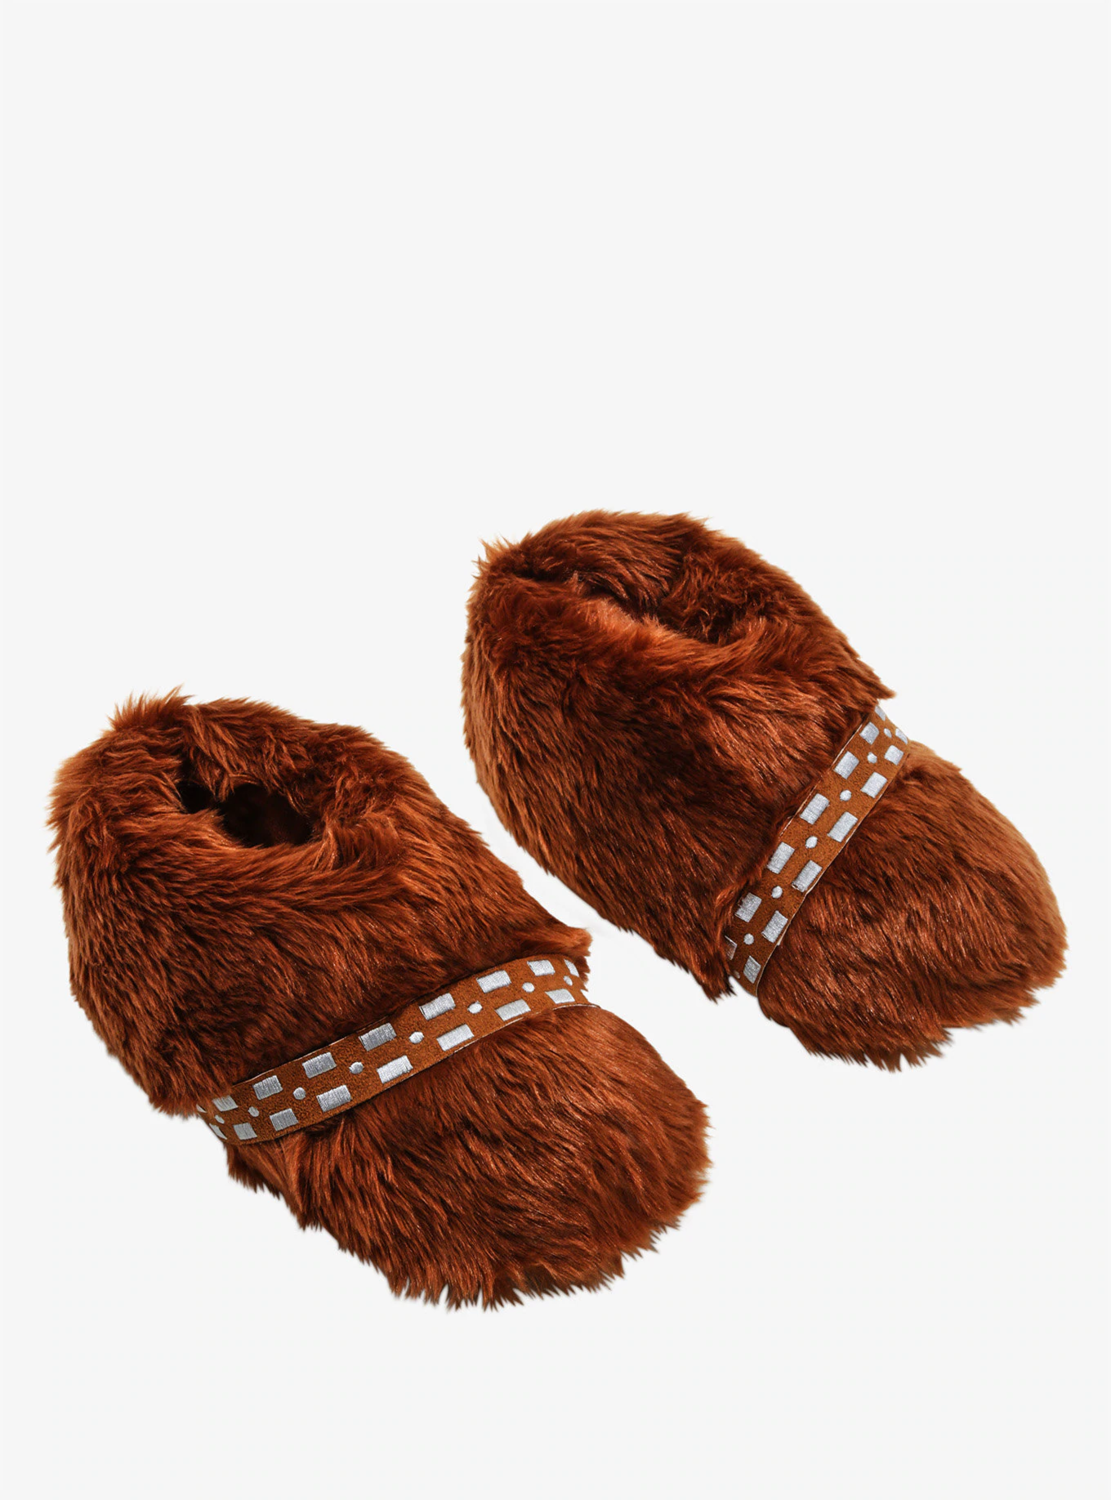 Pantuflas Chewbacca Exclusivas